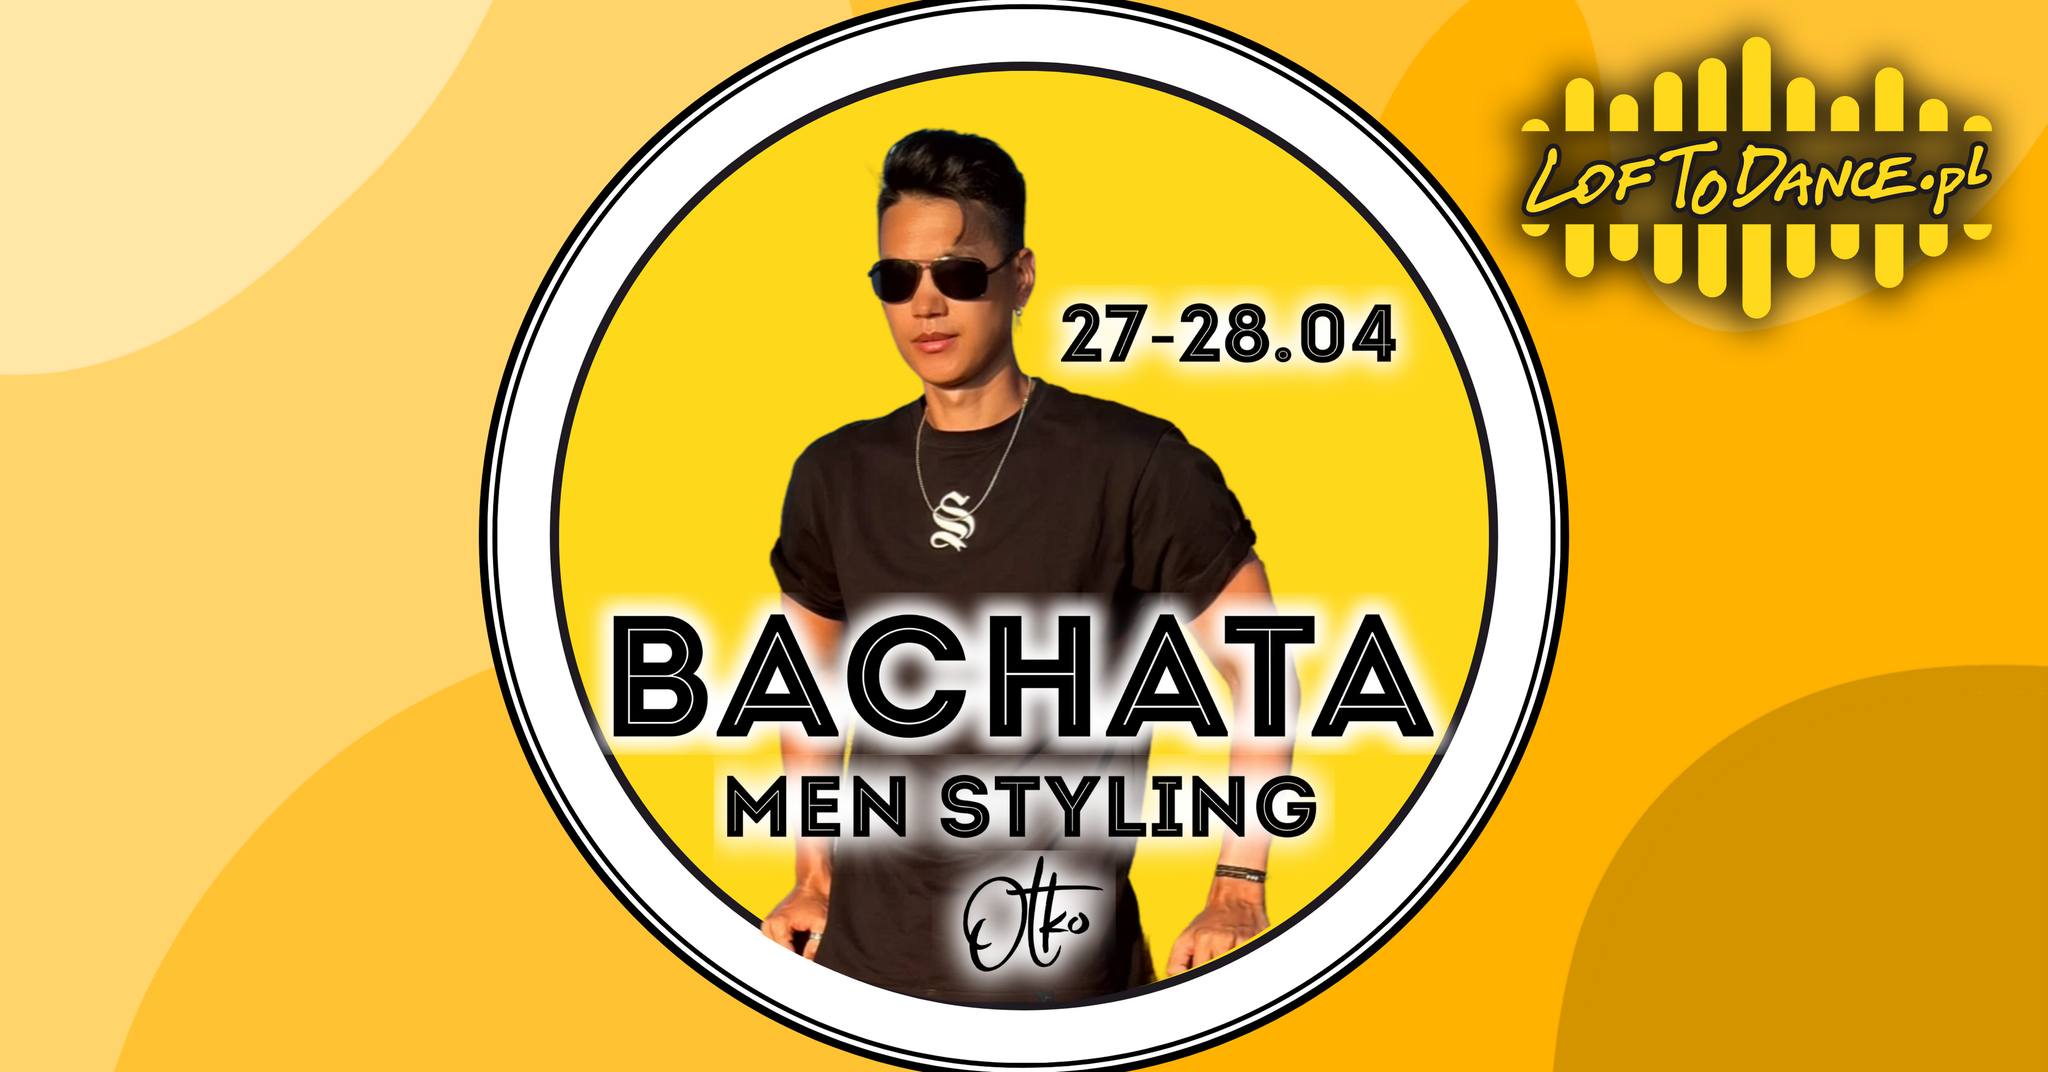 Bachata Men styling - sklep Loftodance